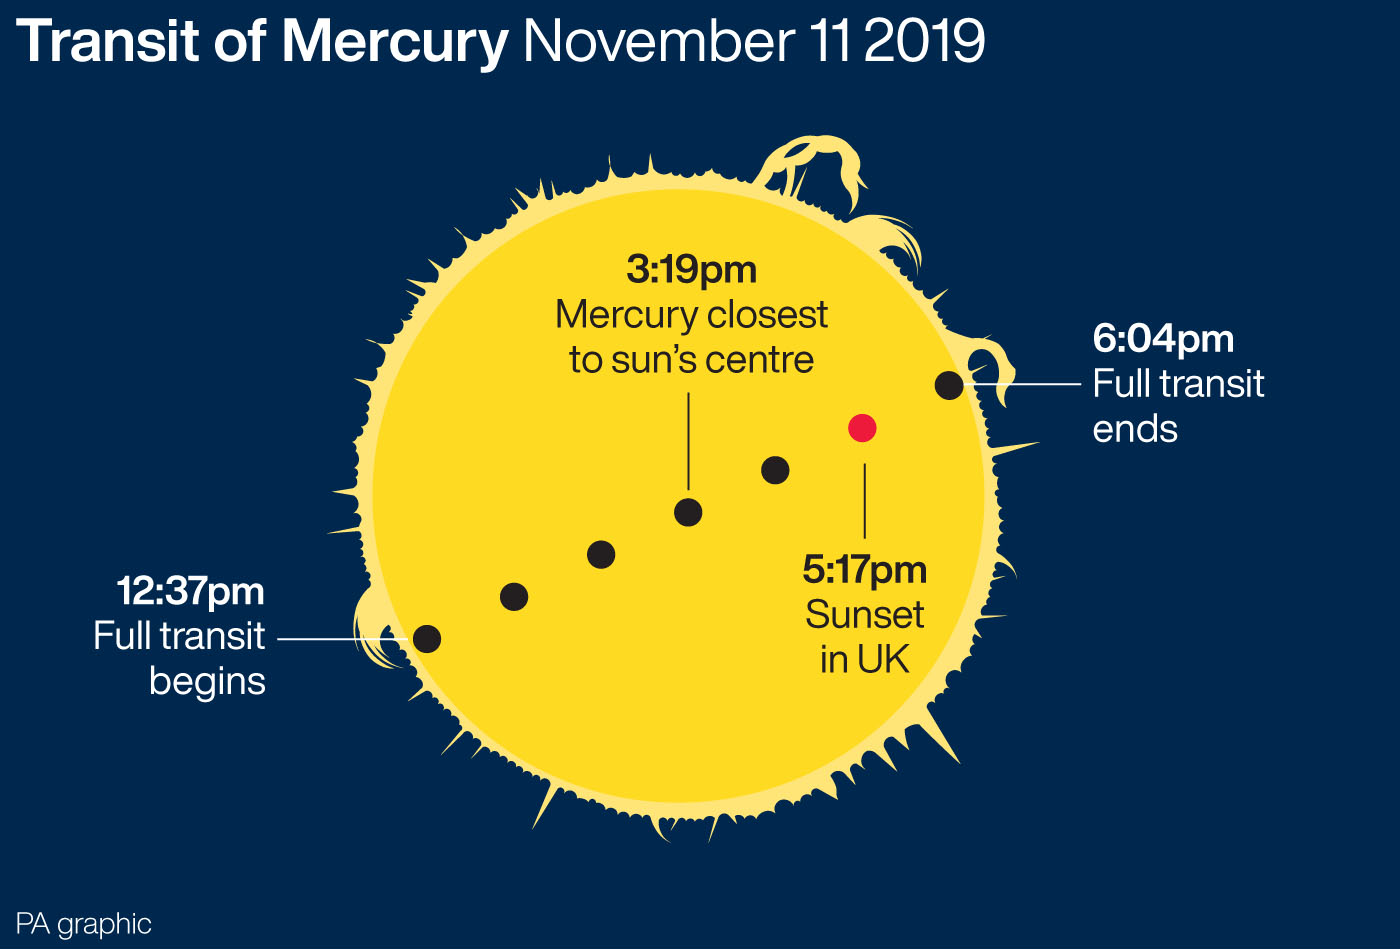 Mercury transits the sun